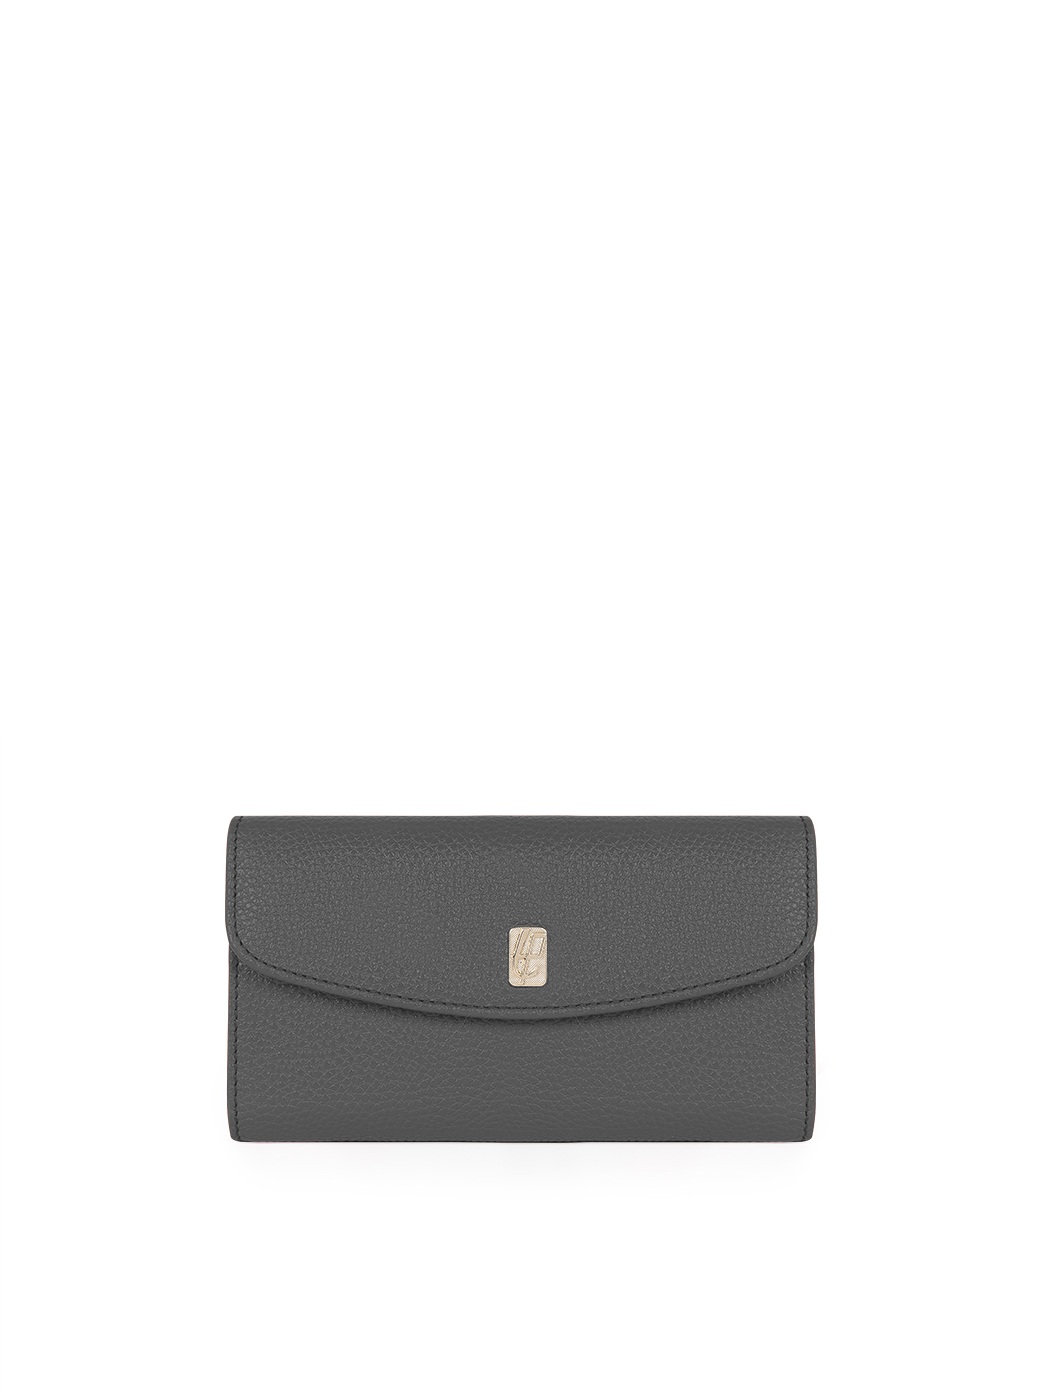 Long black leather wallet